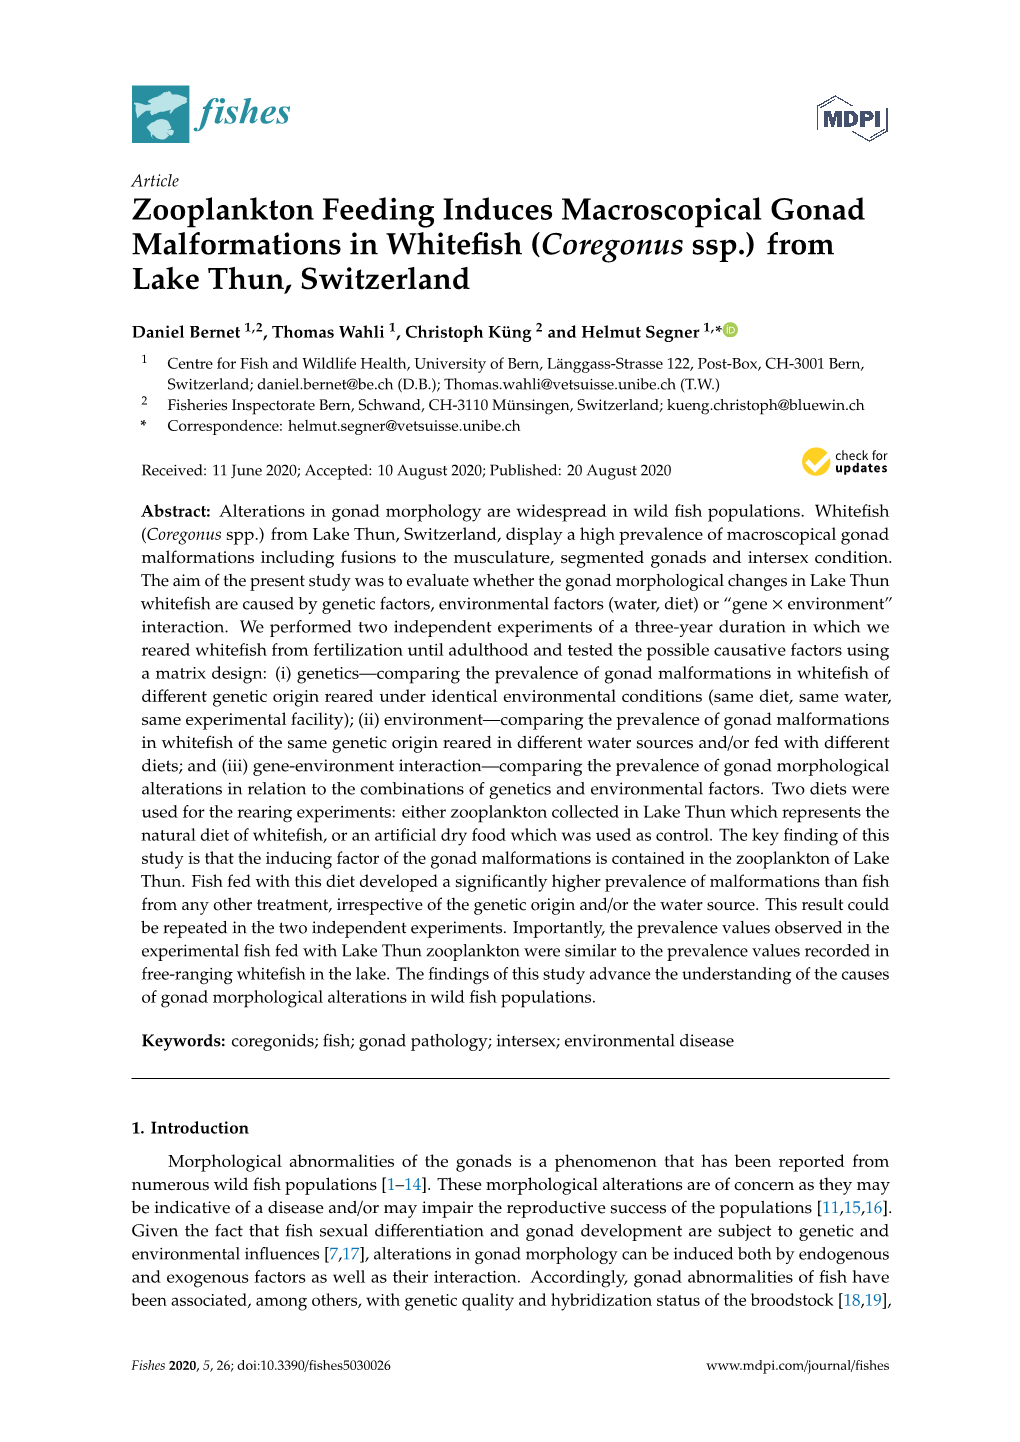 Zooplankton Feeding Induces Macroscopical Gonad Malformations in Whitefish (Coregonus Ssp.) from Lake Thun, Switzerland